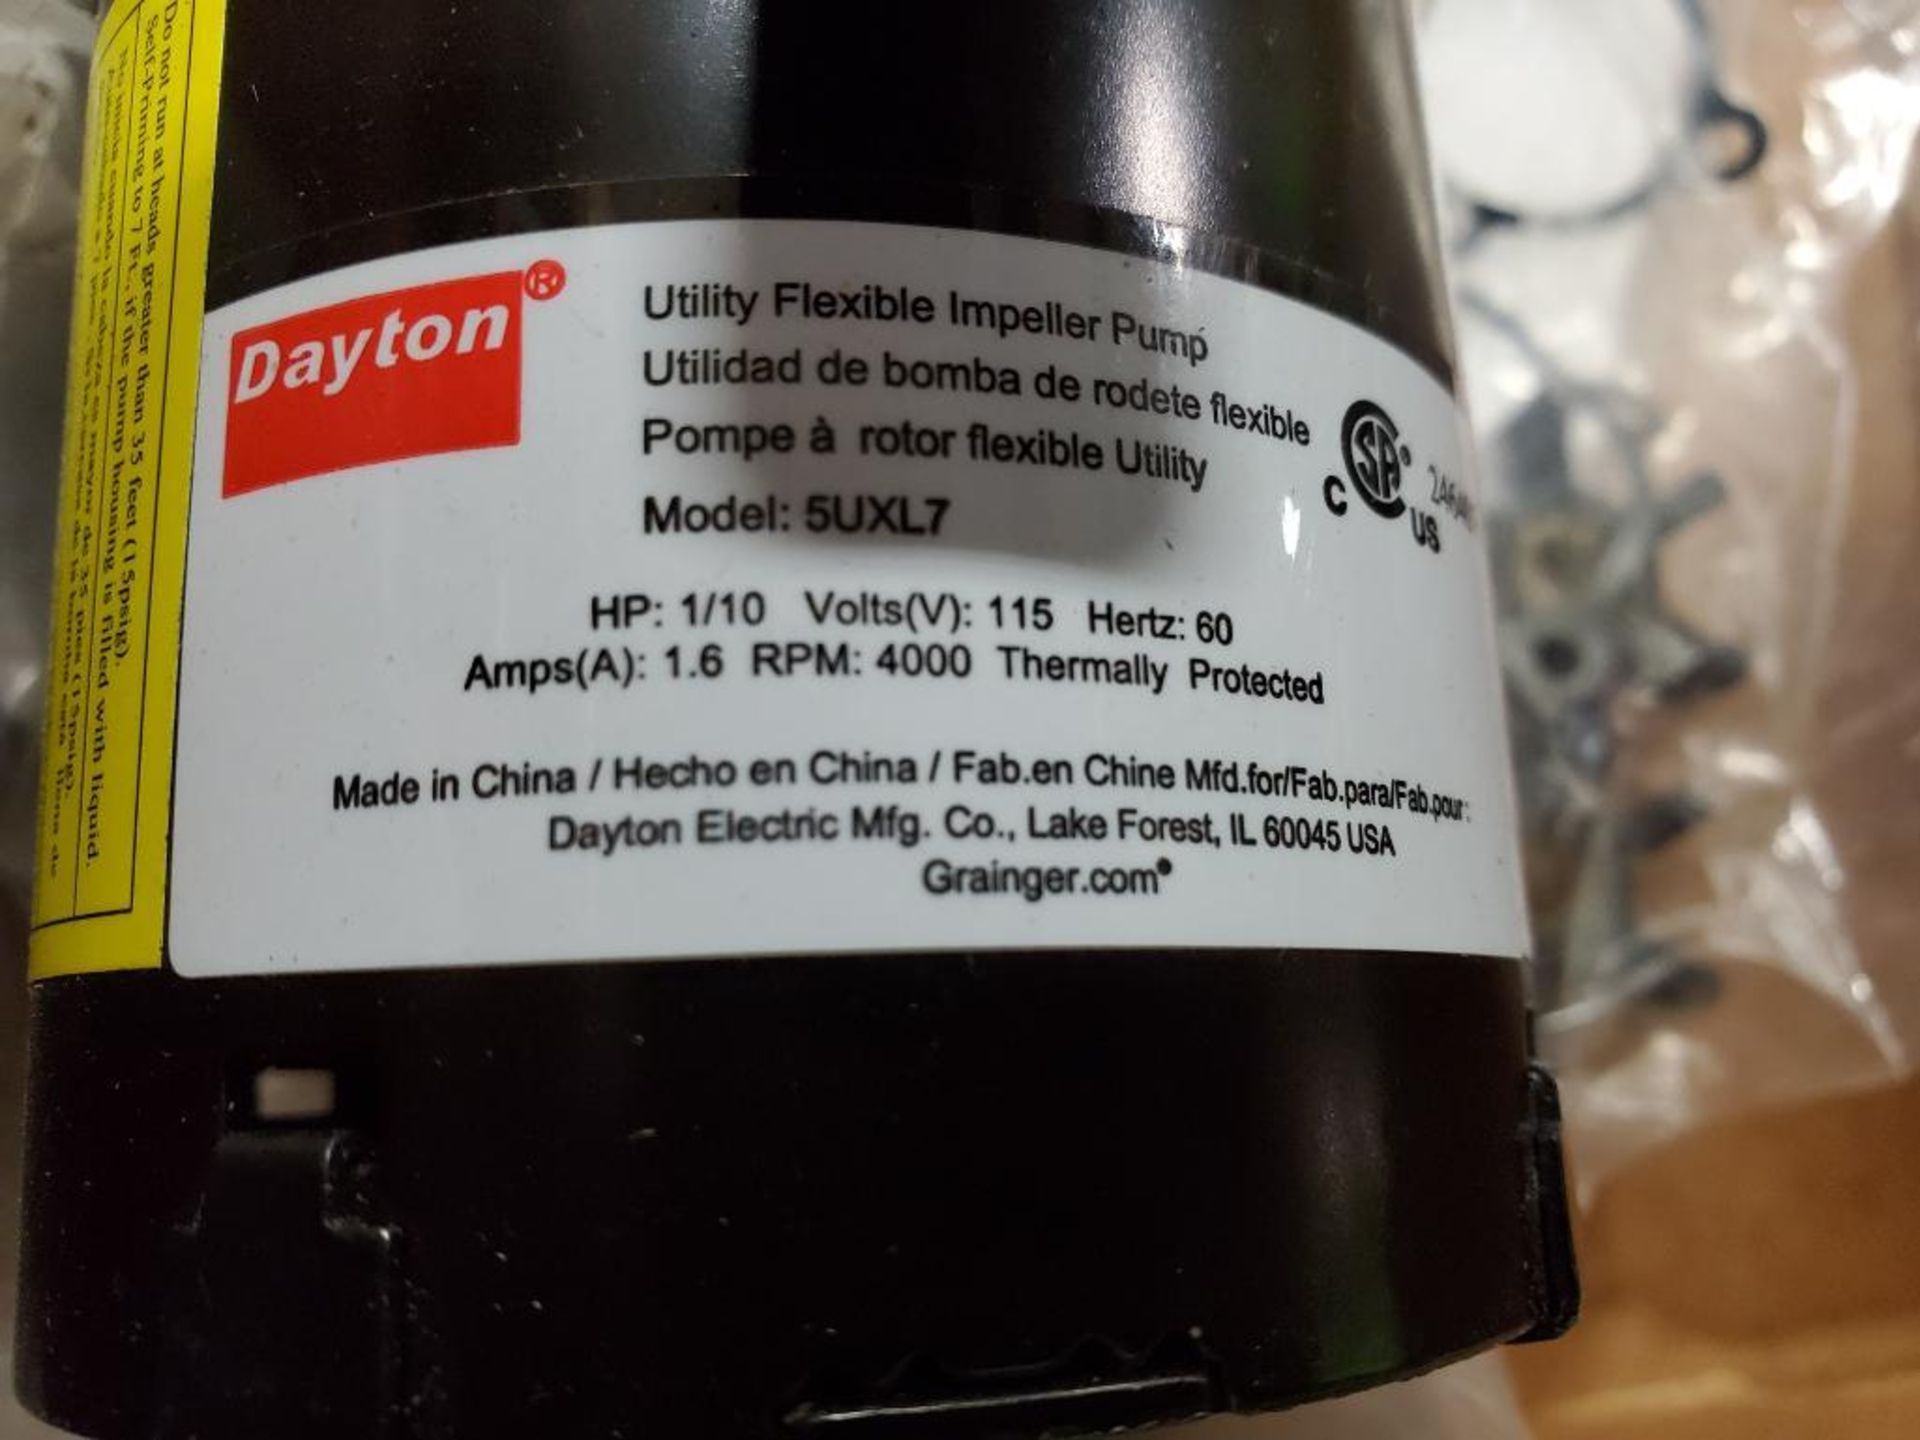 Dayton utility flexible impeller pump 5UXL7. New no box. - Image 3 of 5